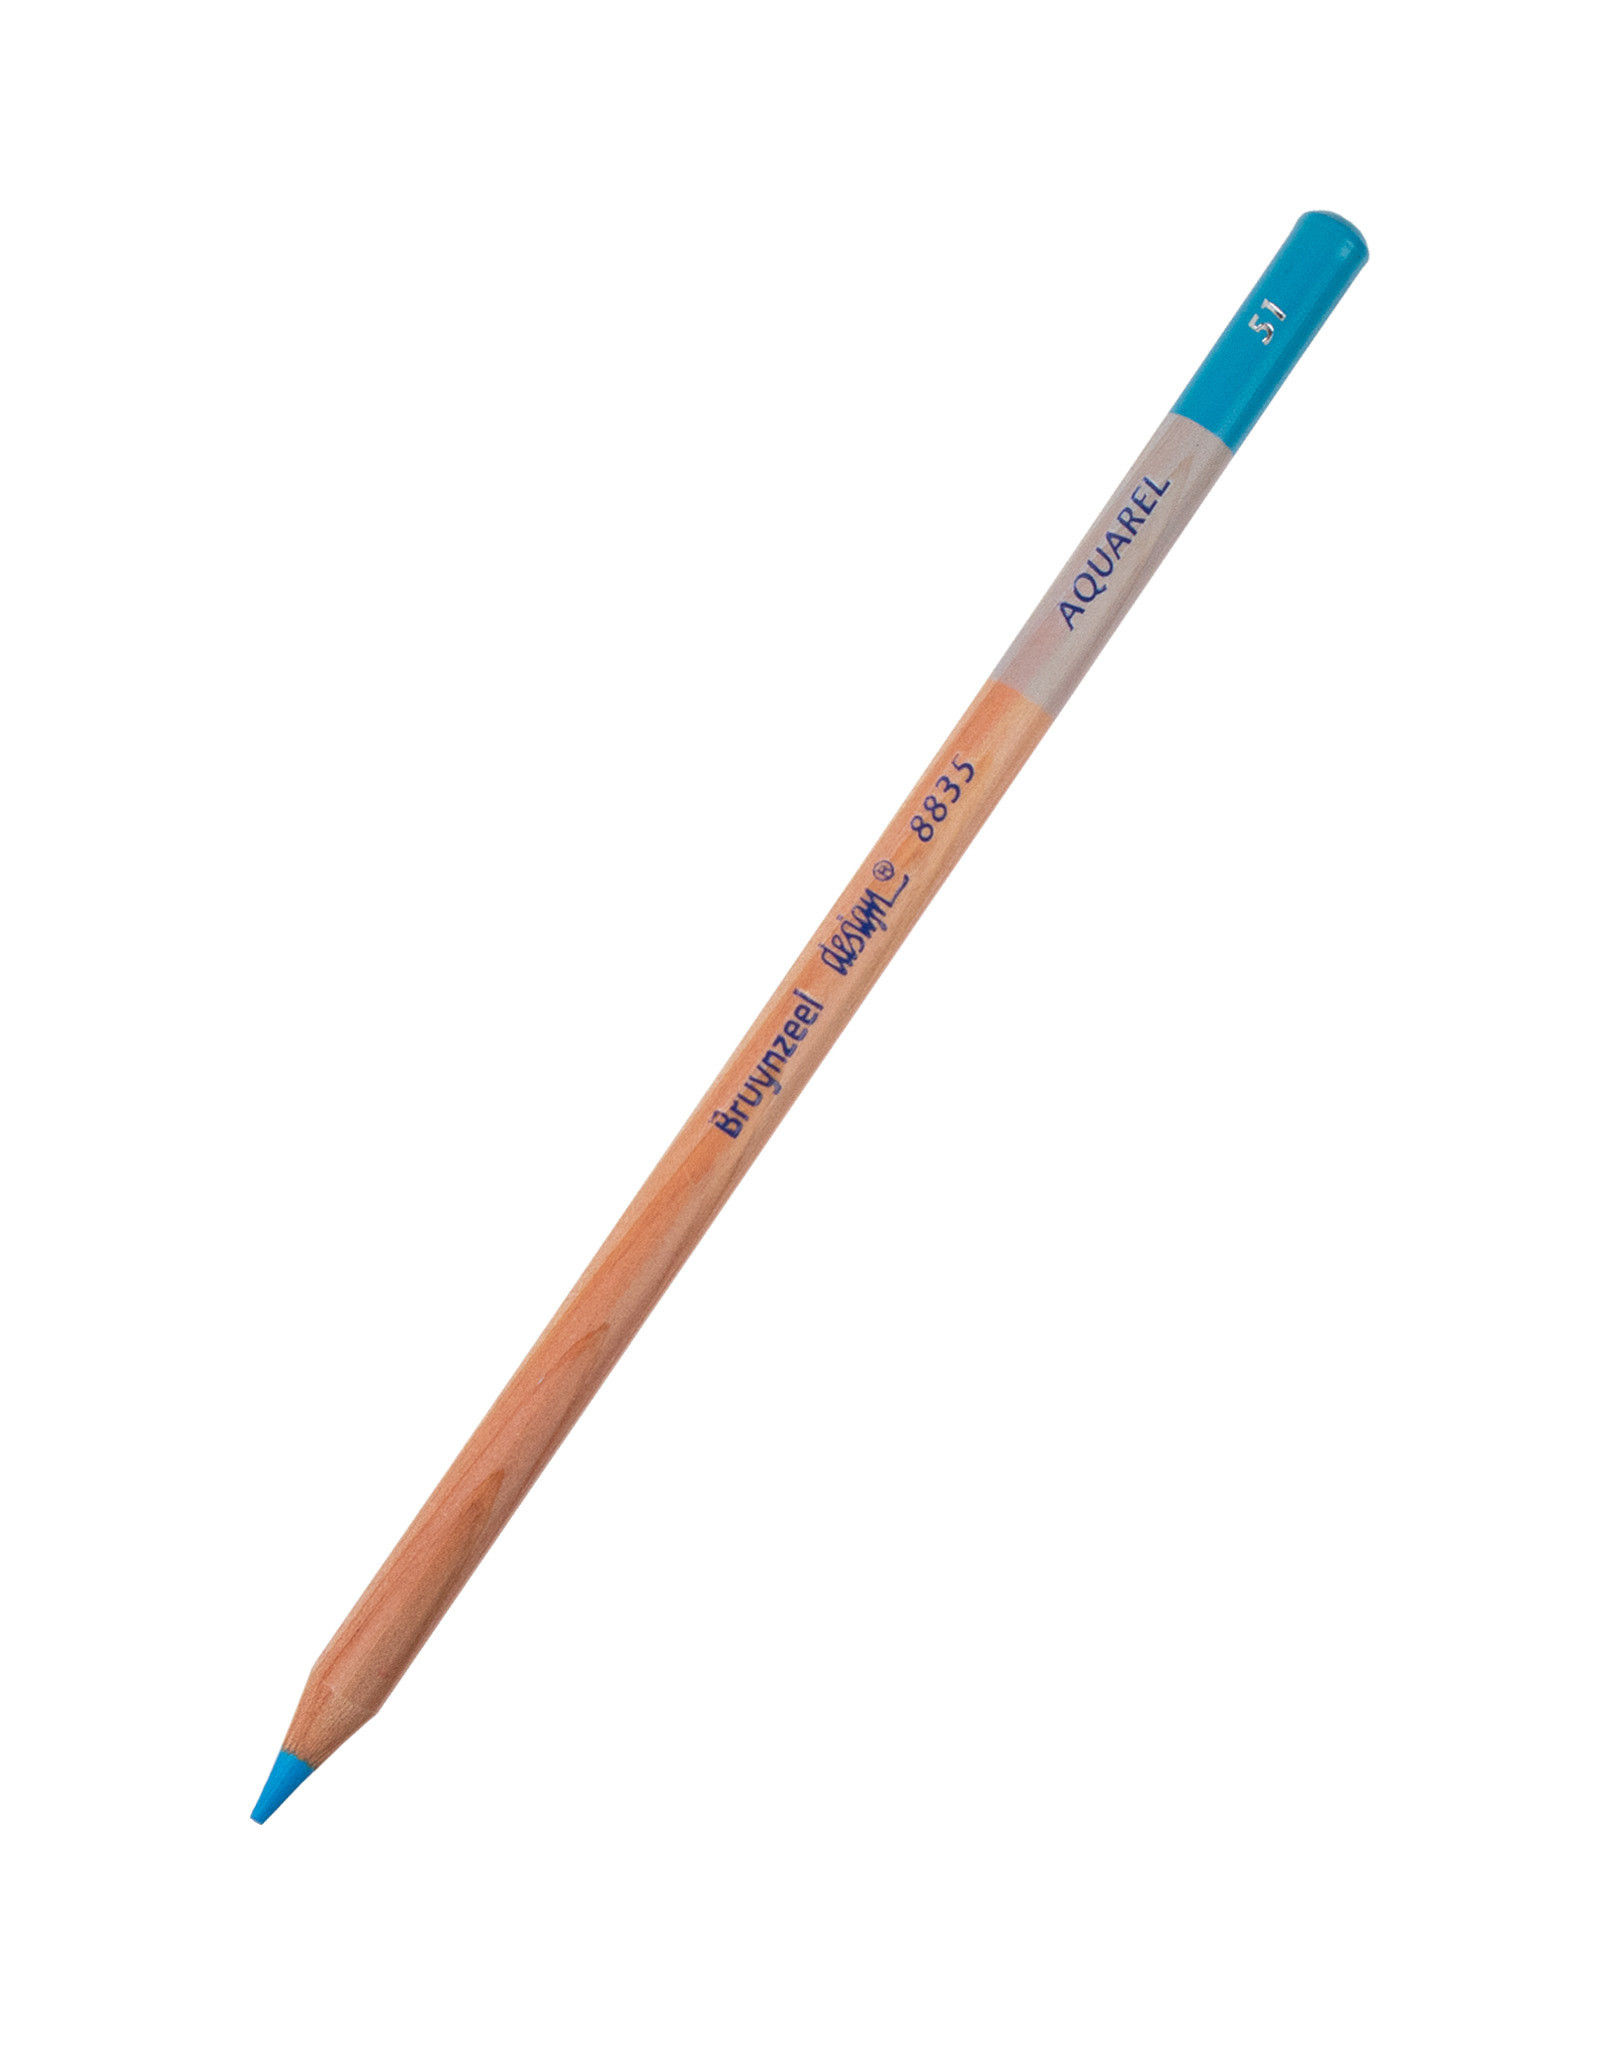 Royal Talens Bruynzeel Design Aquarel Pencil, Light Blue